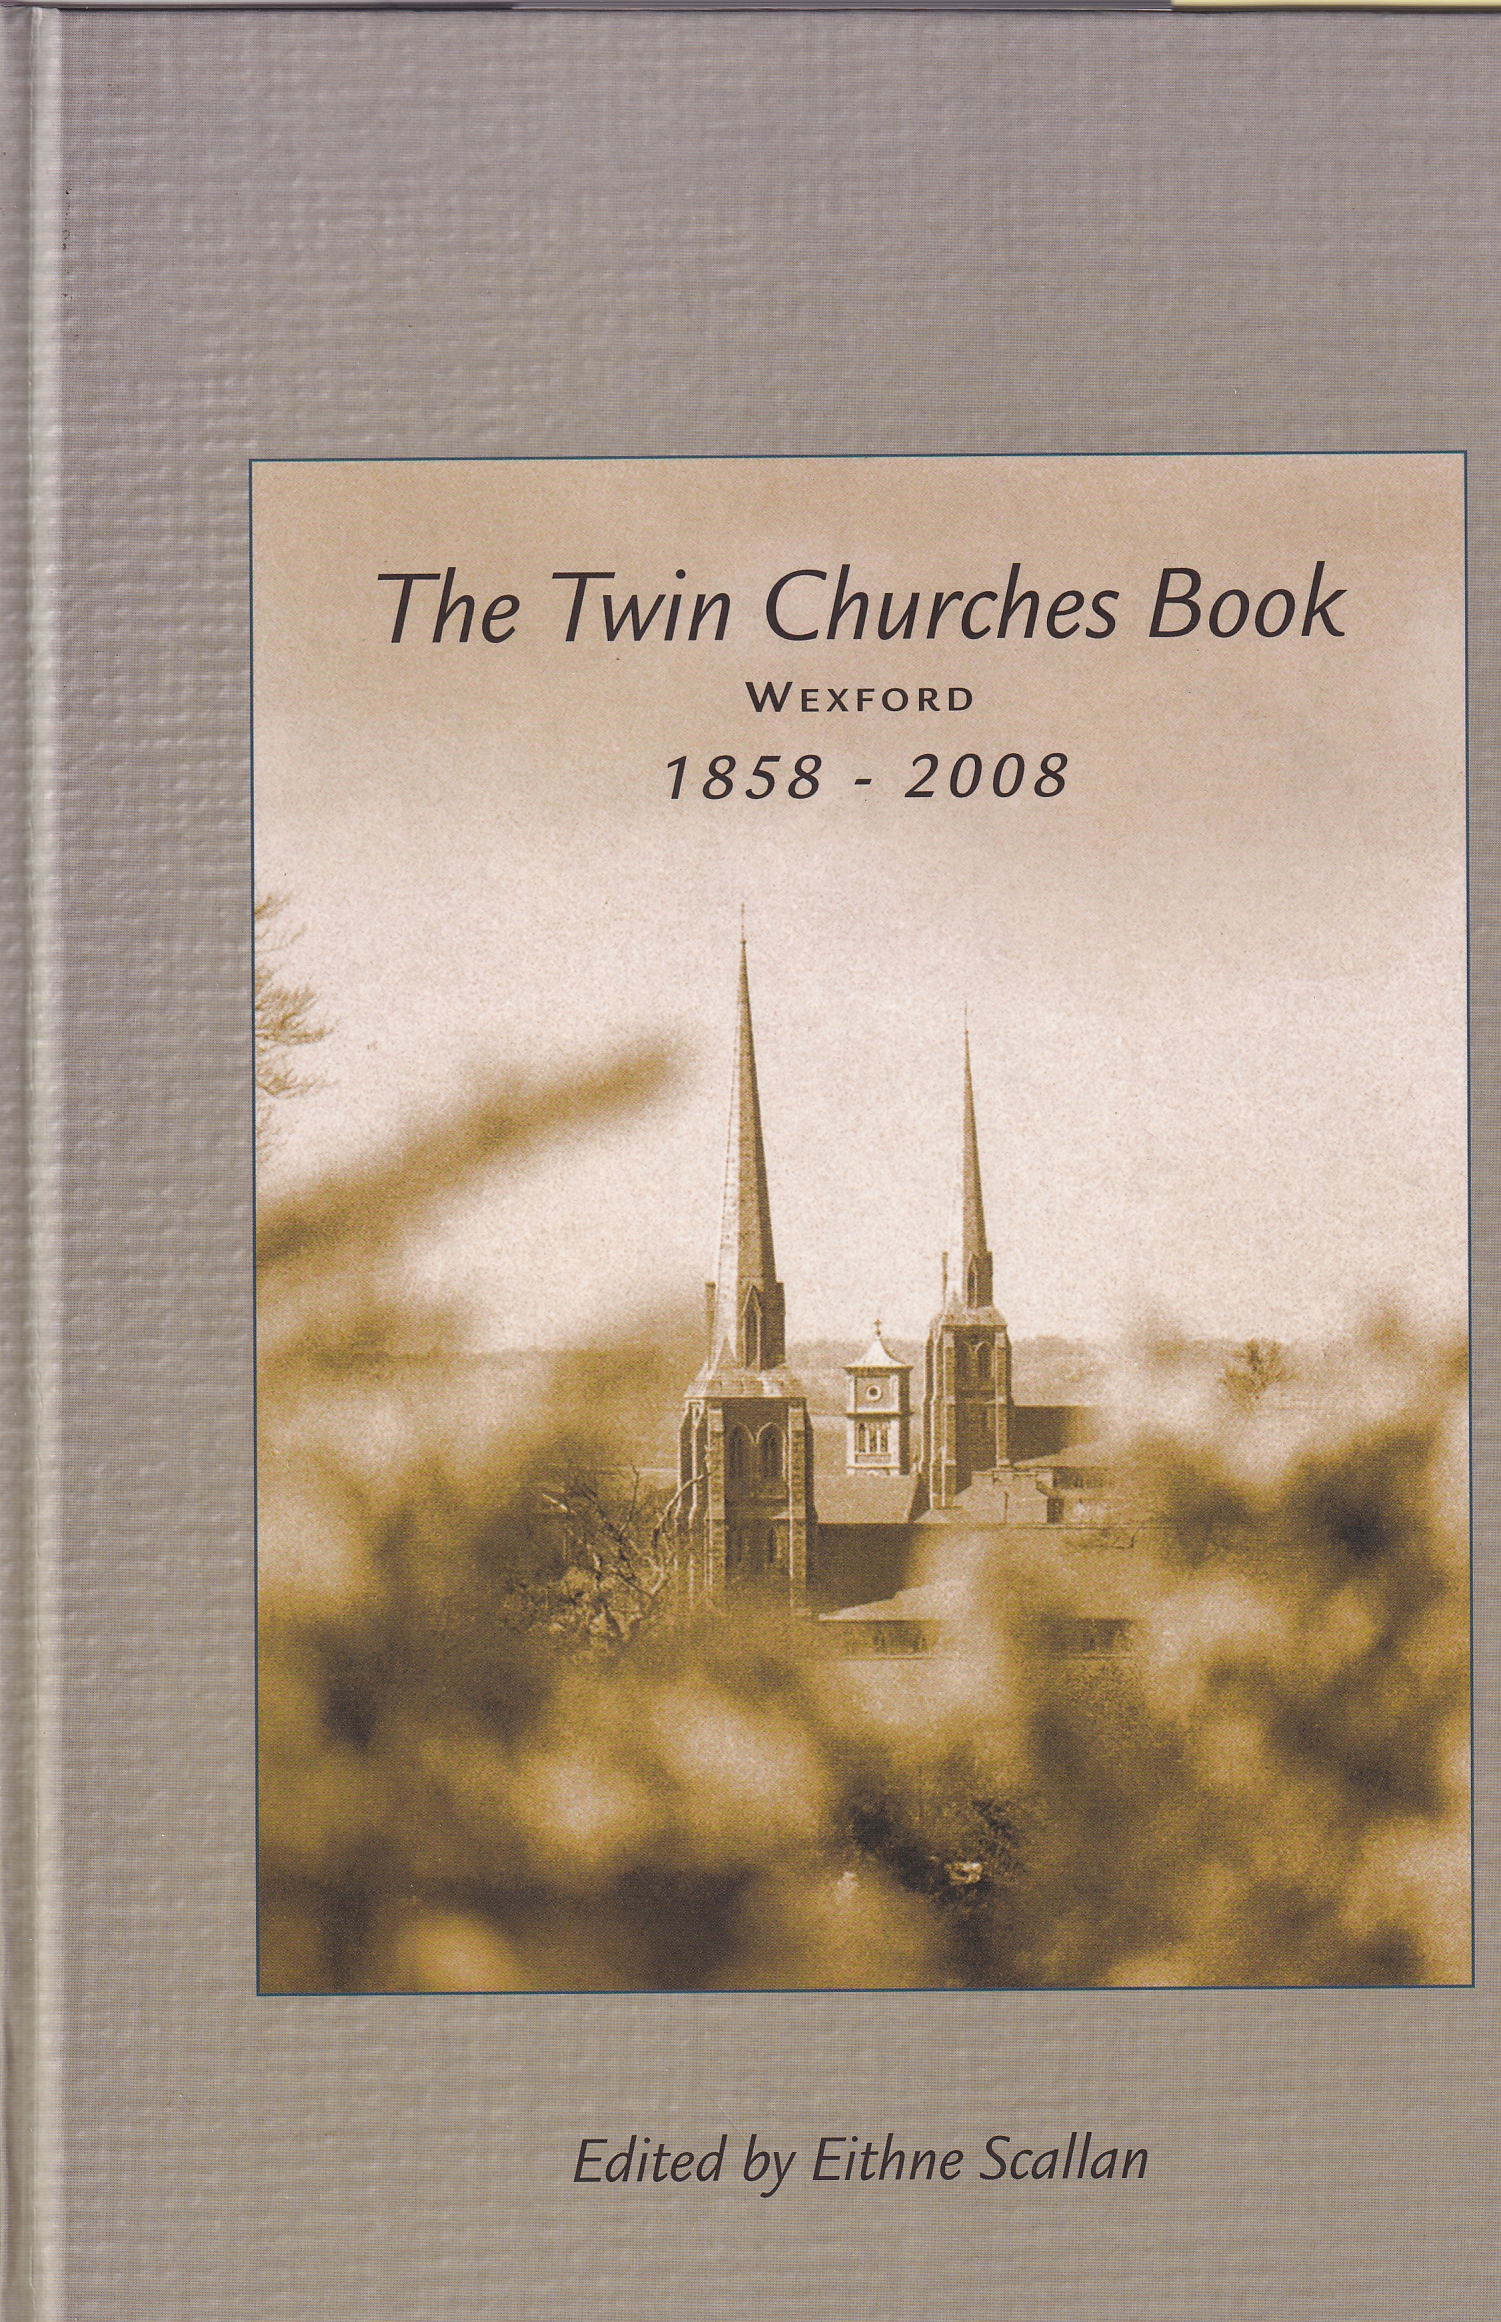 Twin Churches Book, The: Wexford 1858-2008 by Edith Scallan